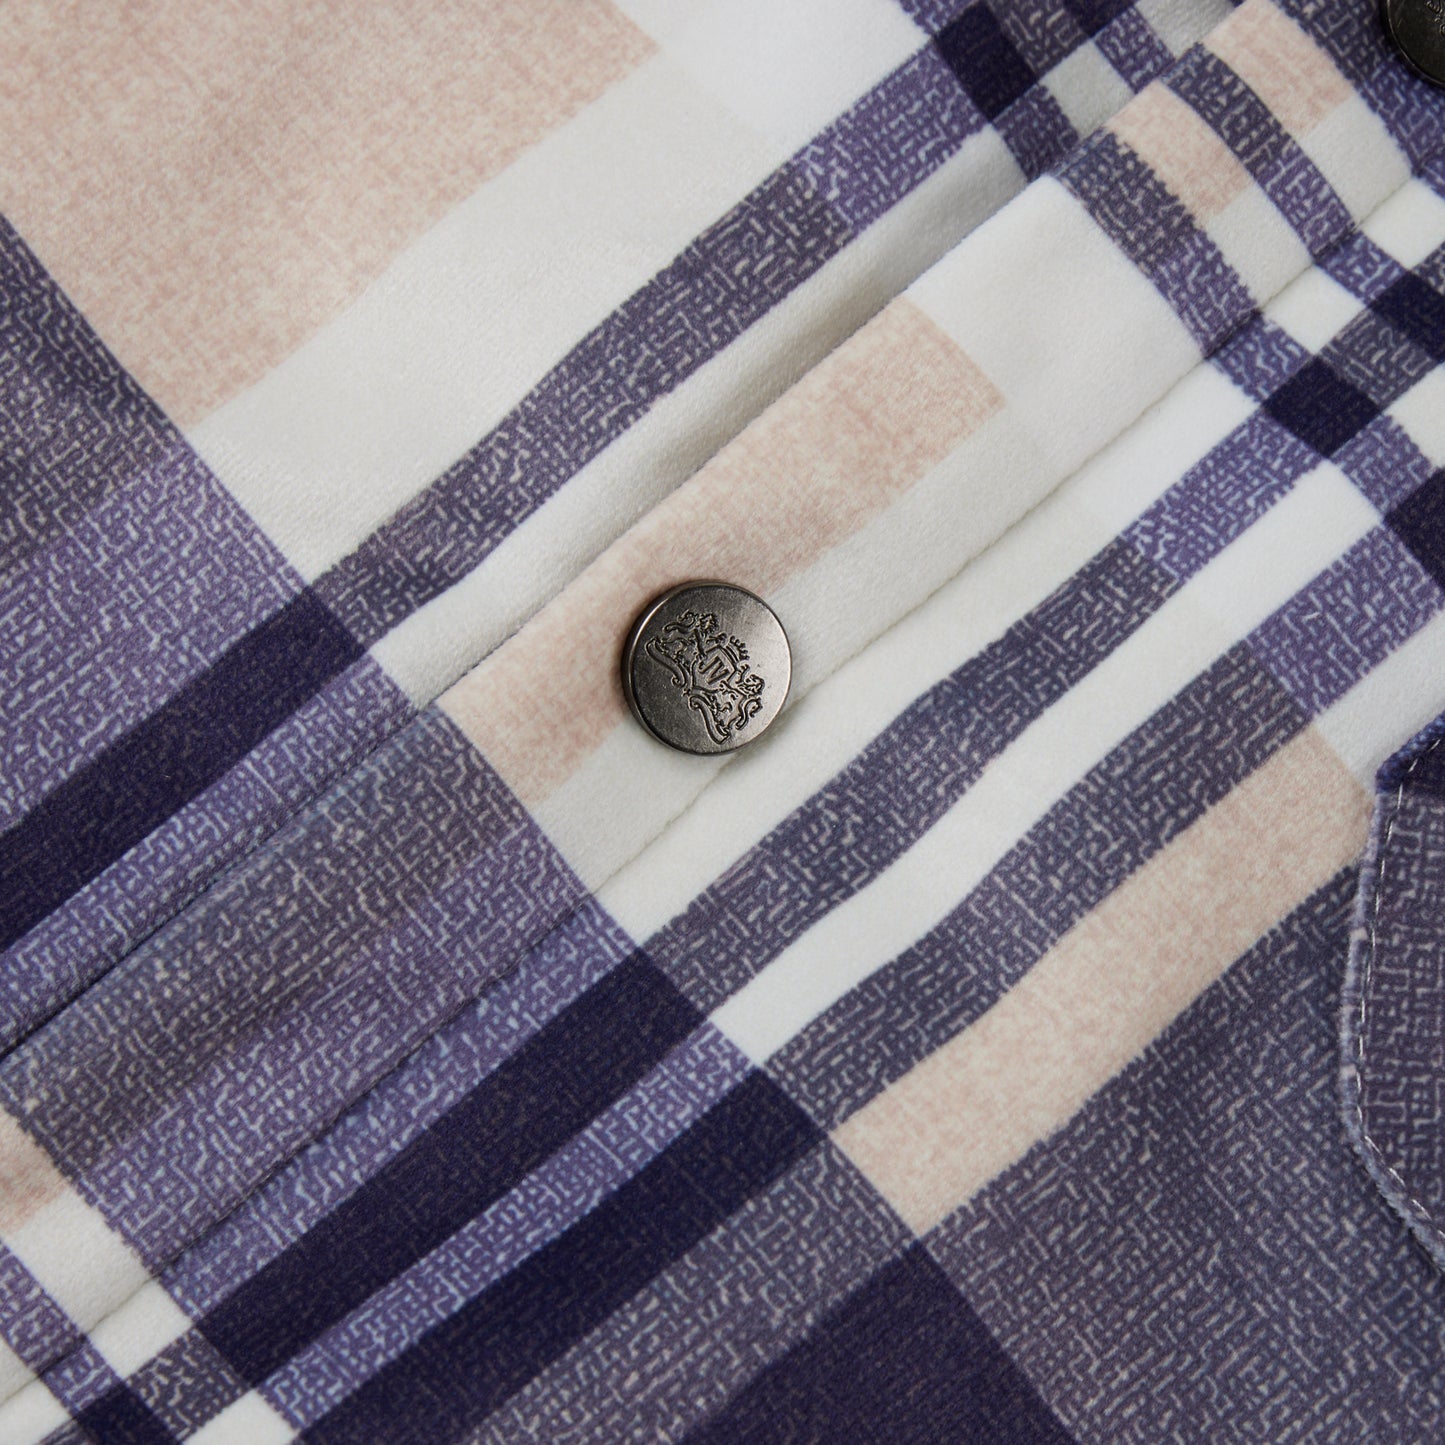 Flannel Plaid Button Shirt Jacket